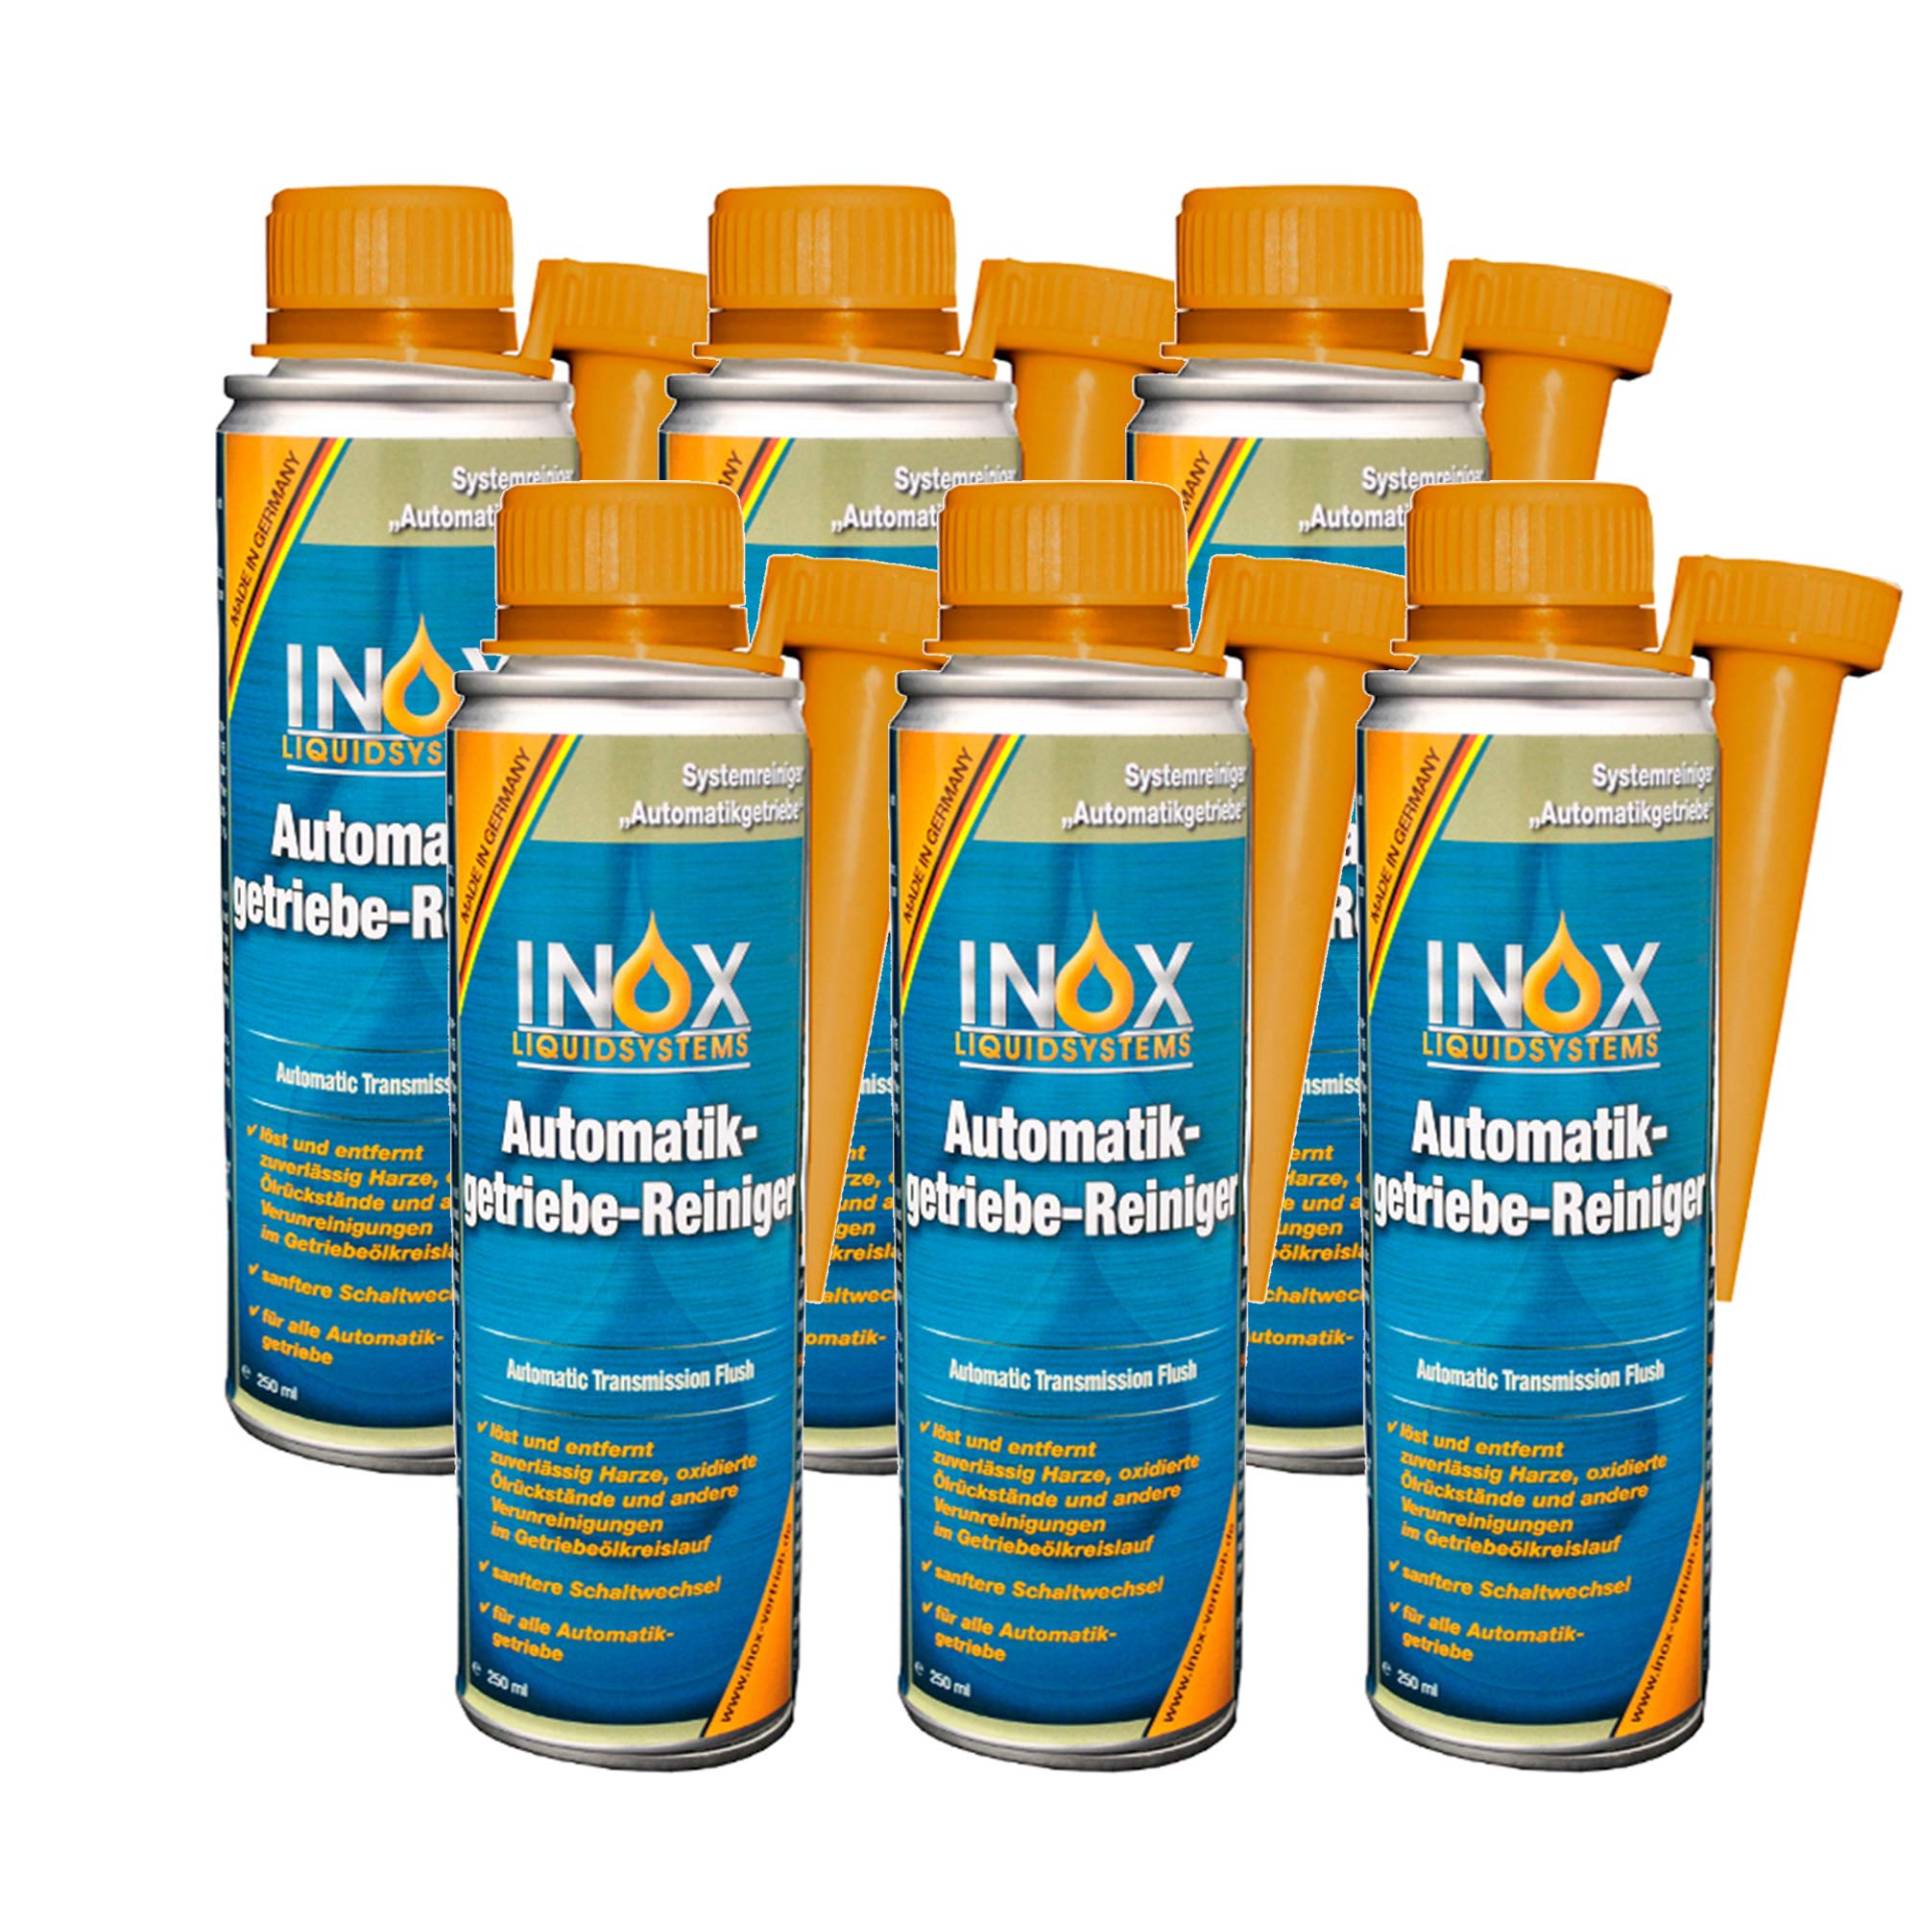 INOX® Automatikgetriebe-Reiniger Additiv, 6 x 250ml - Getriebereiniger Zusatz für Automatikgetriebe Getriebeschutz von INOX-LIQUIDSYSTEMS